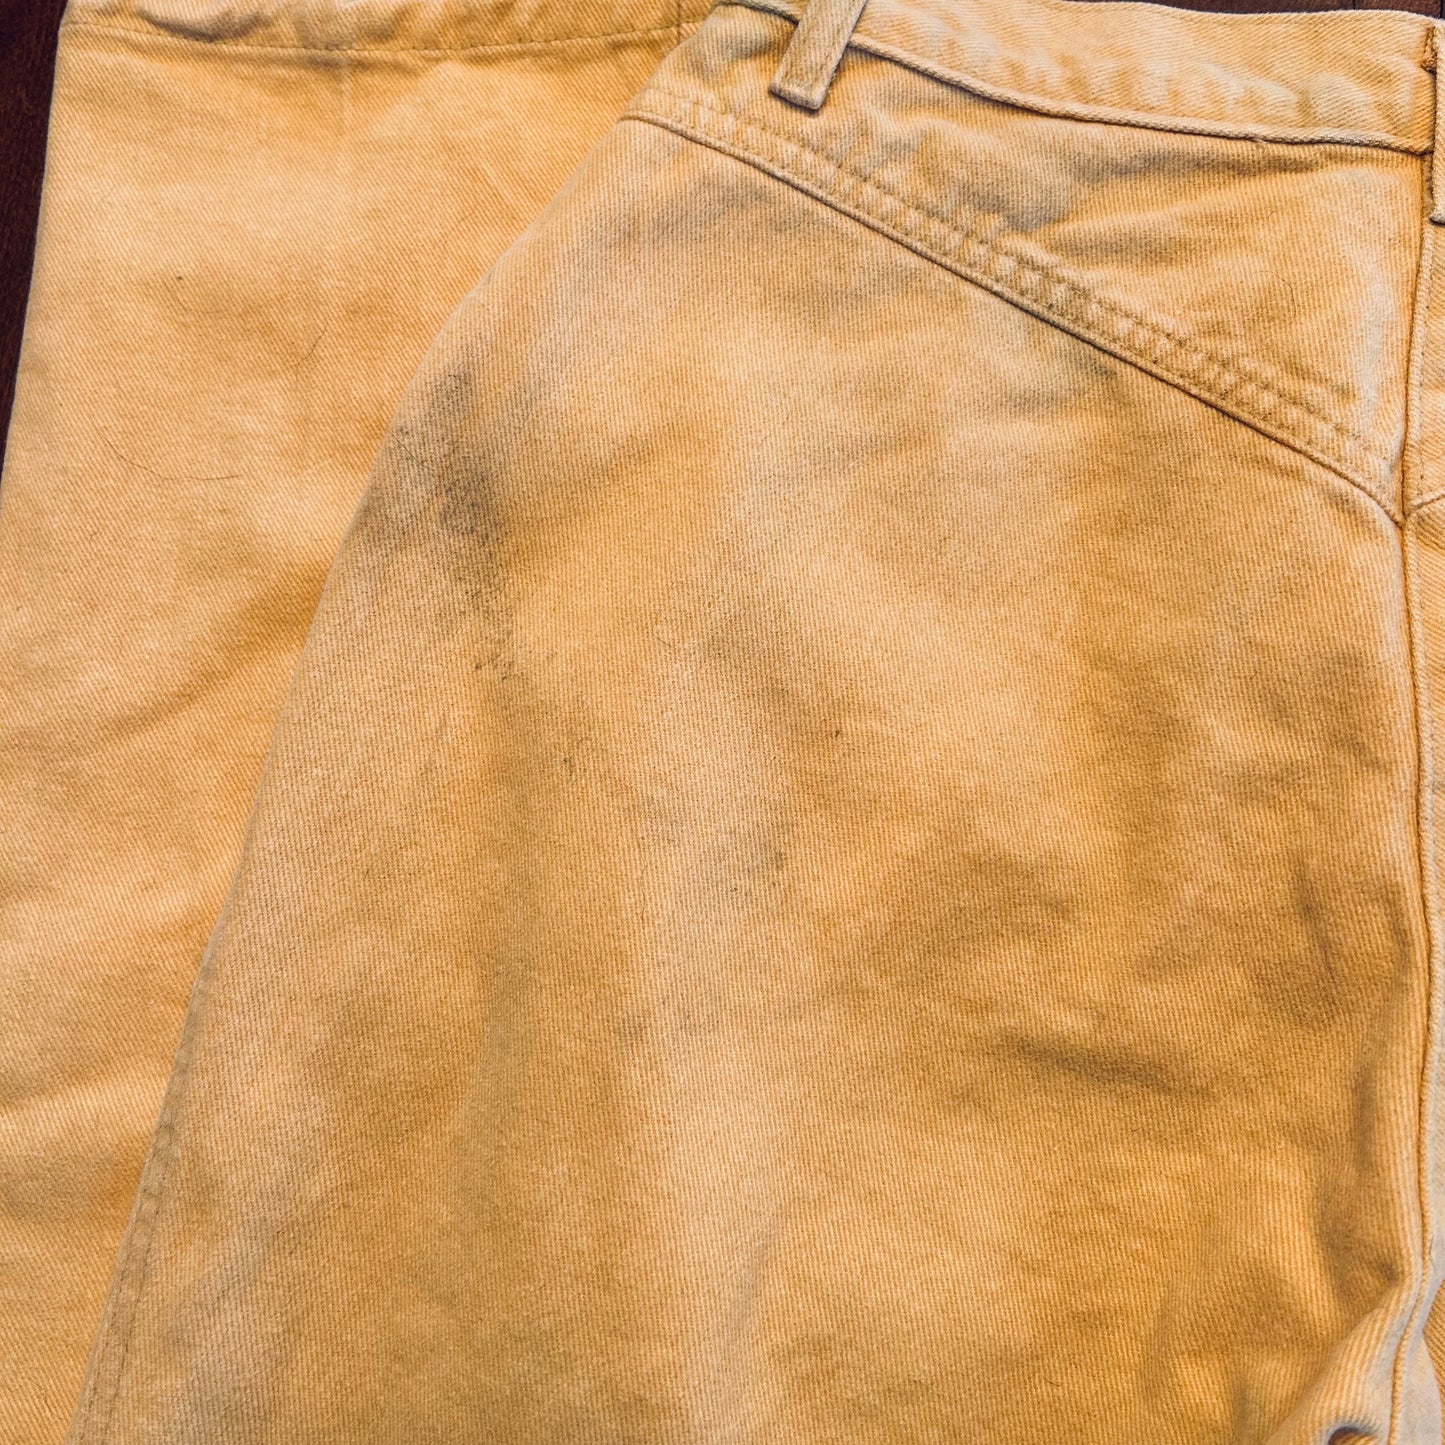 Yellow Roper Bareback Jeans Size 27x35